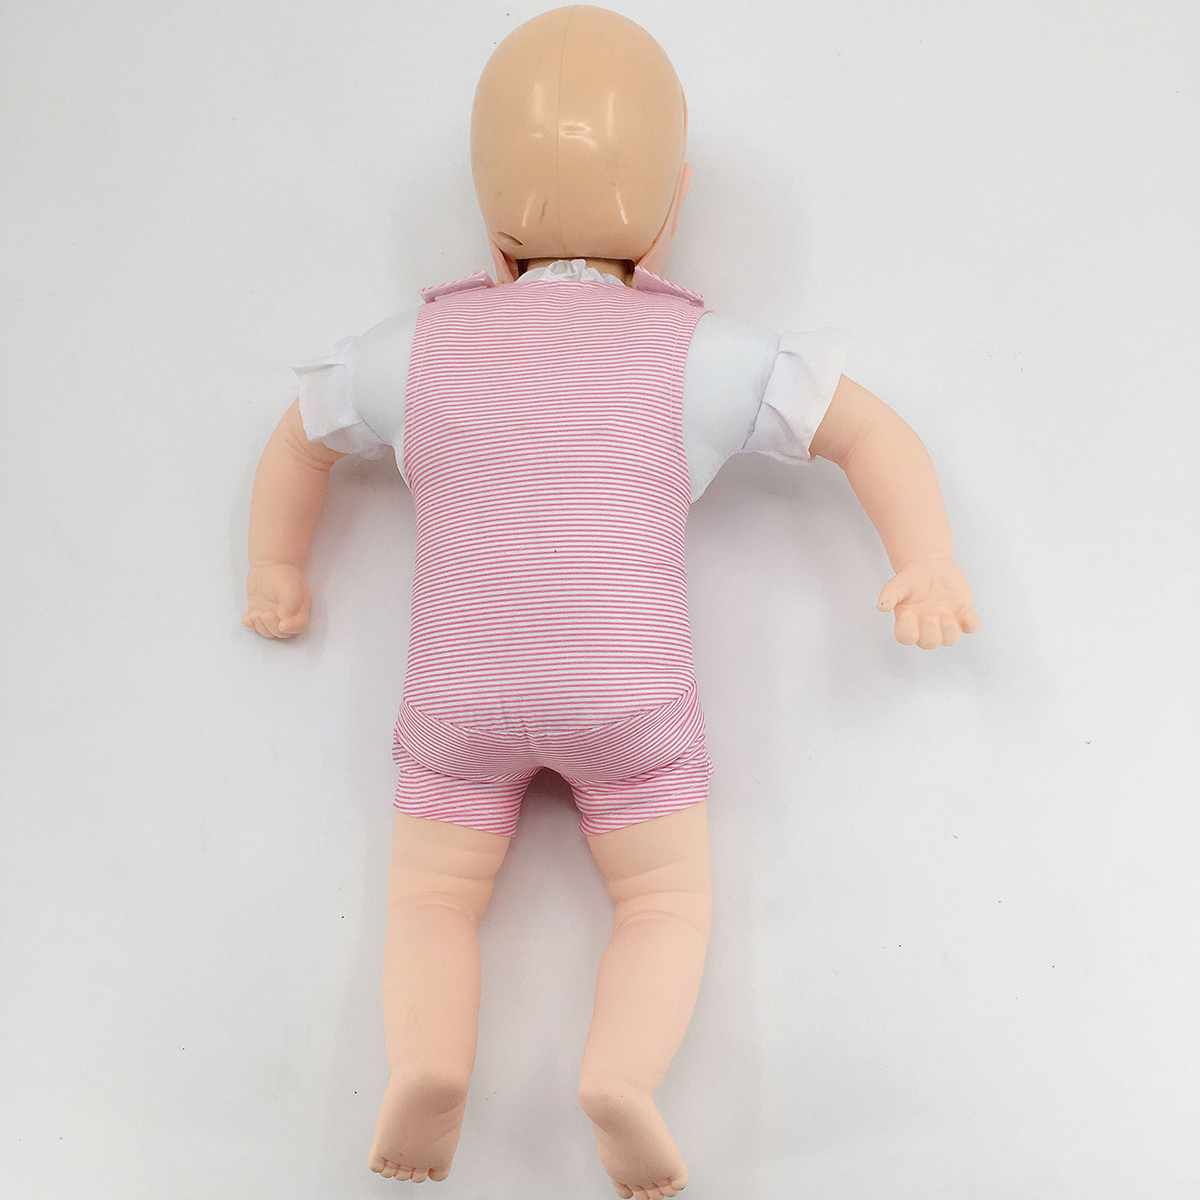 CPR-Reborn-Doll-Resusci-Infant-Training-Manikin-Model-With-Case-6-Airways-Set-1196358-5